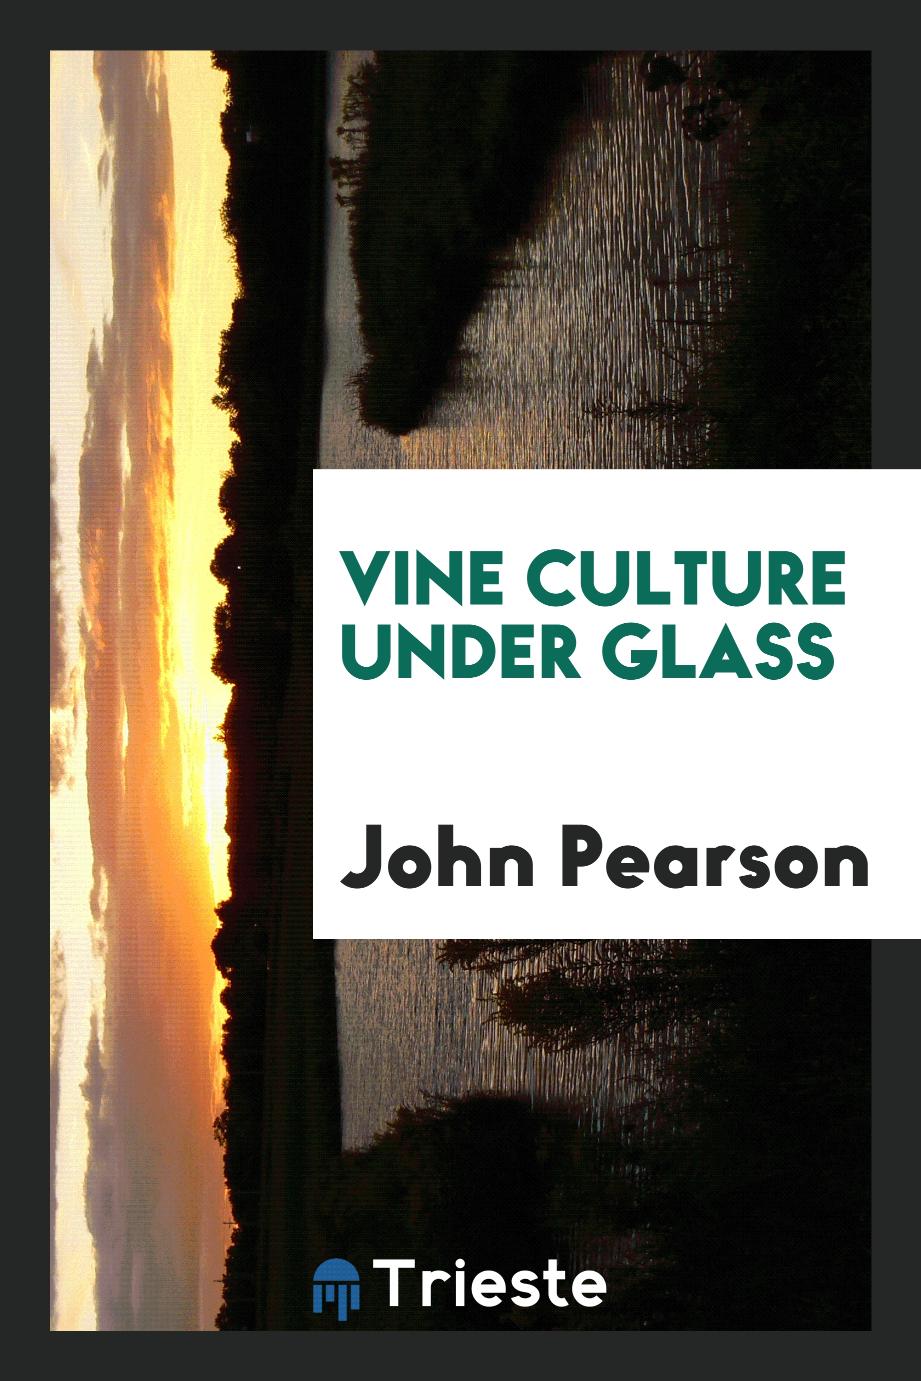 Vine culture under glass